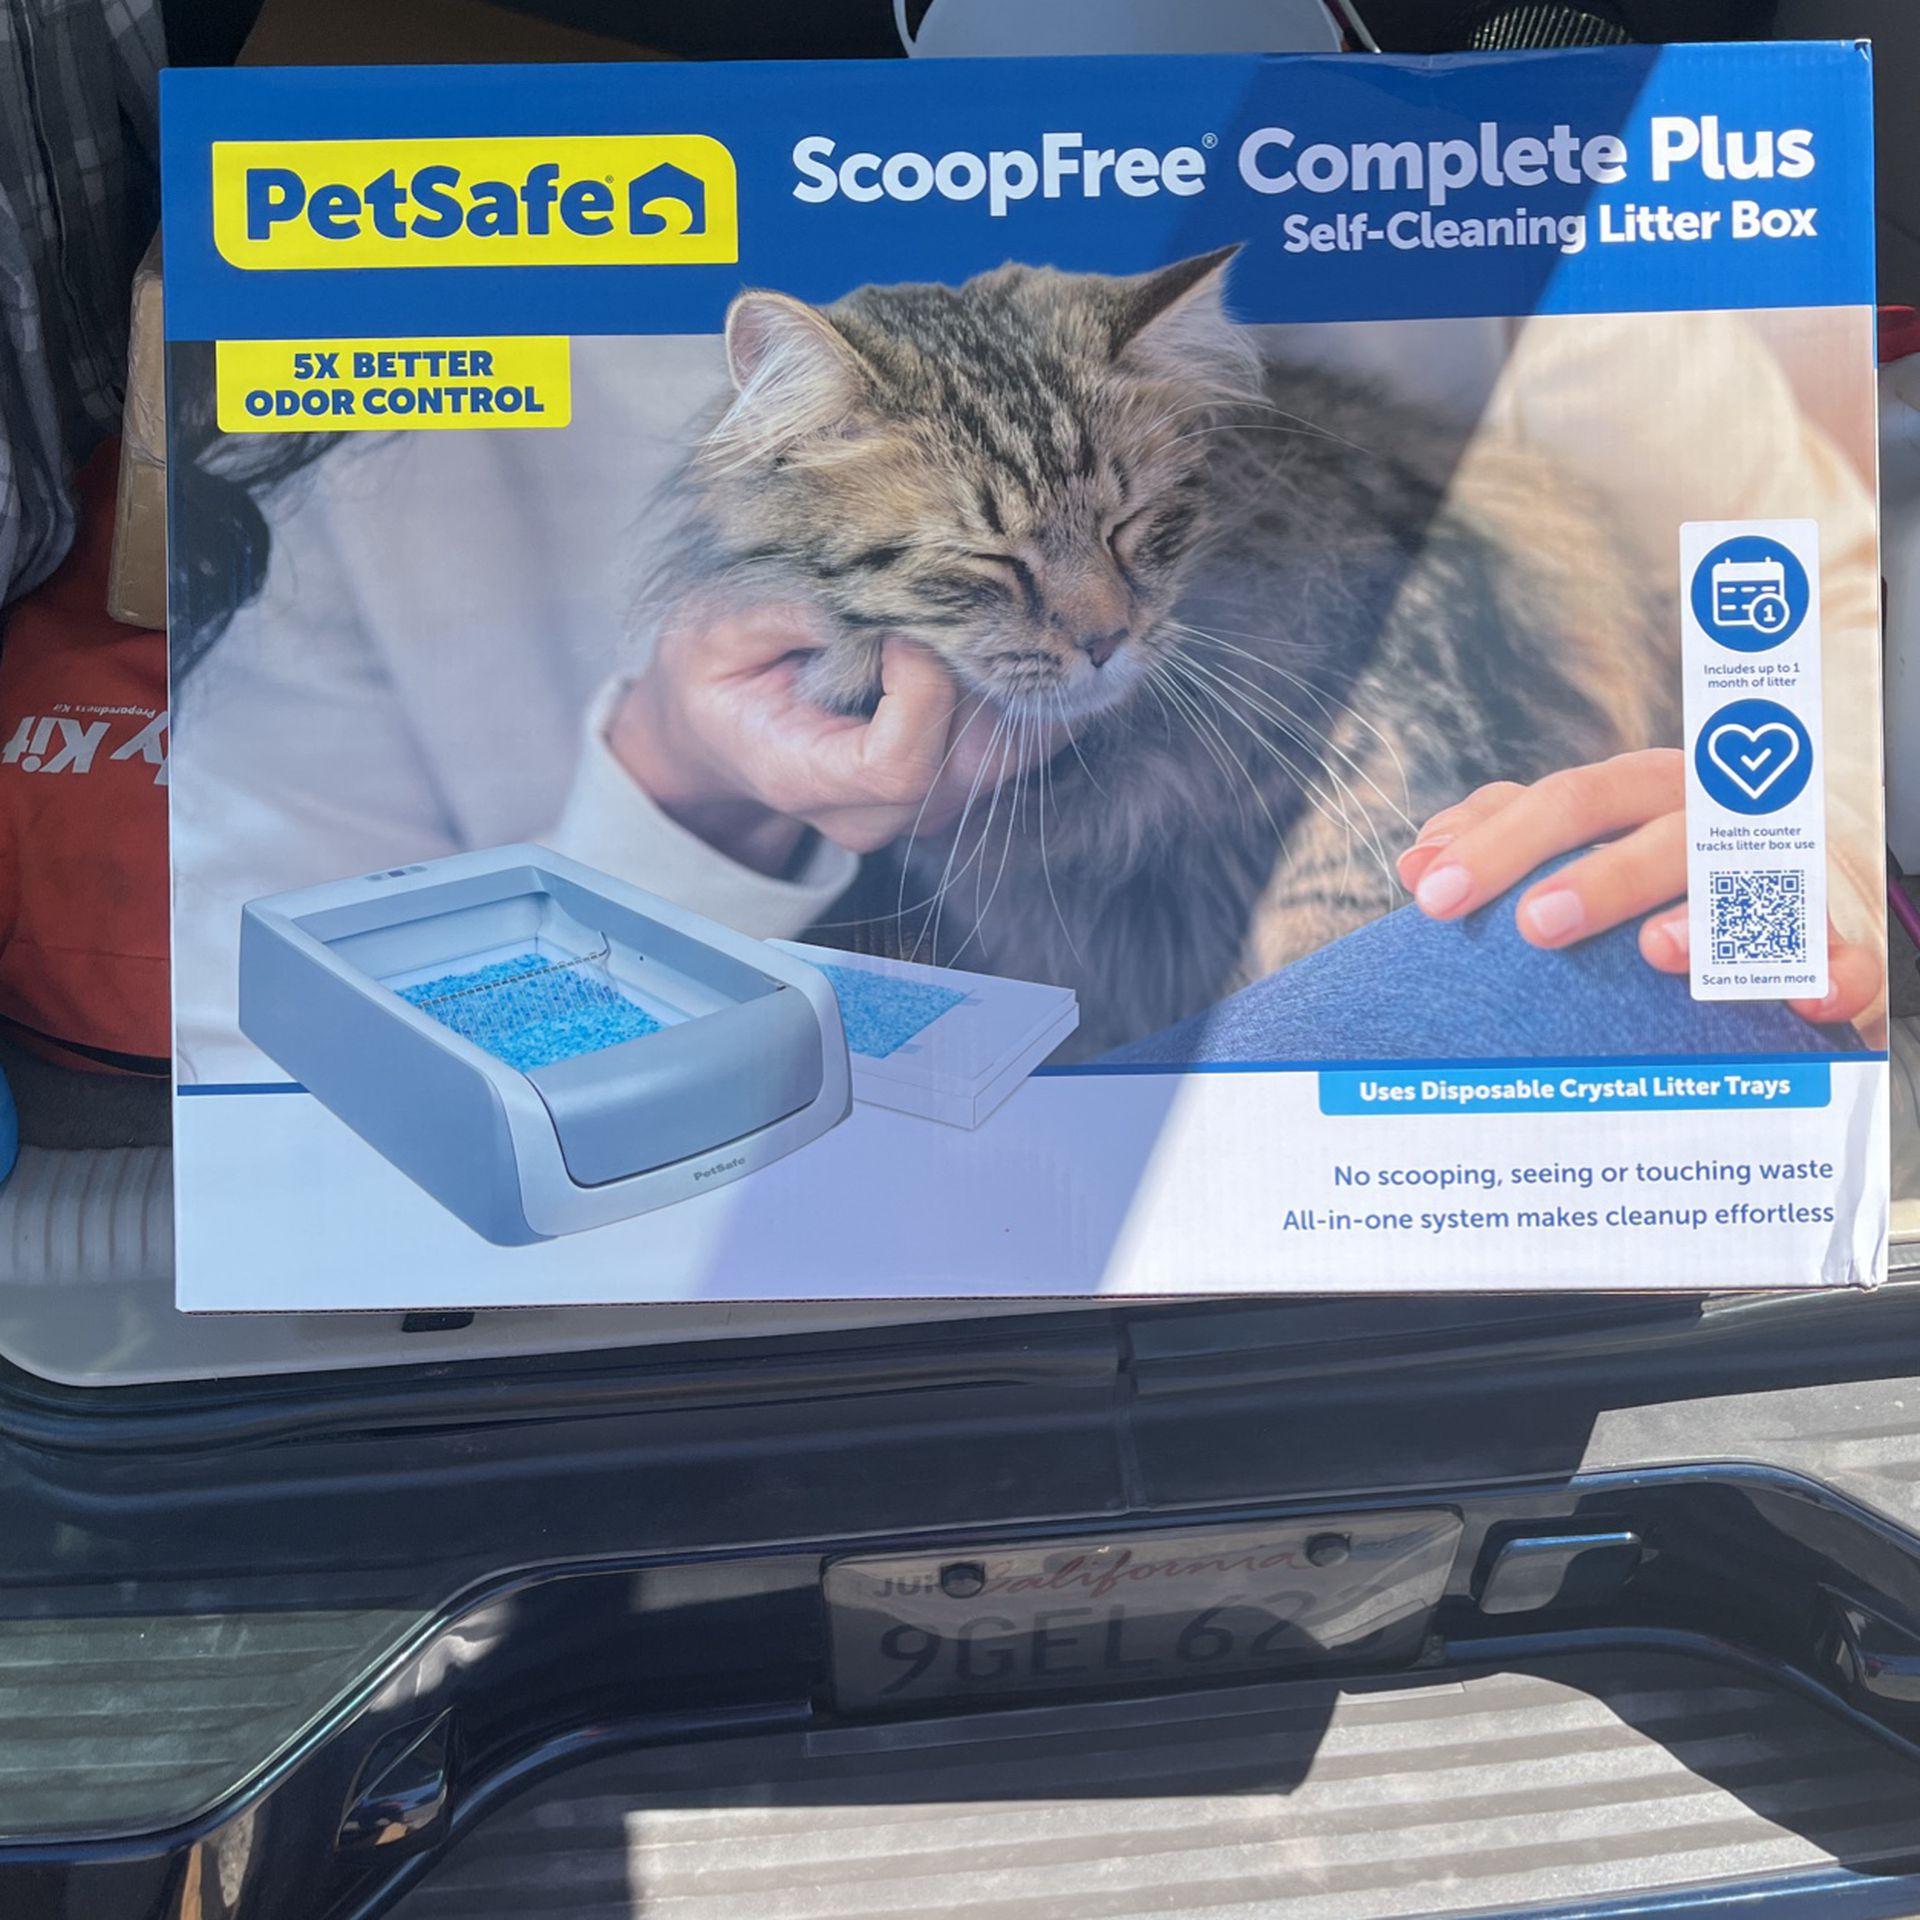 PetSafe Self-Cleaning Litter Box